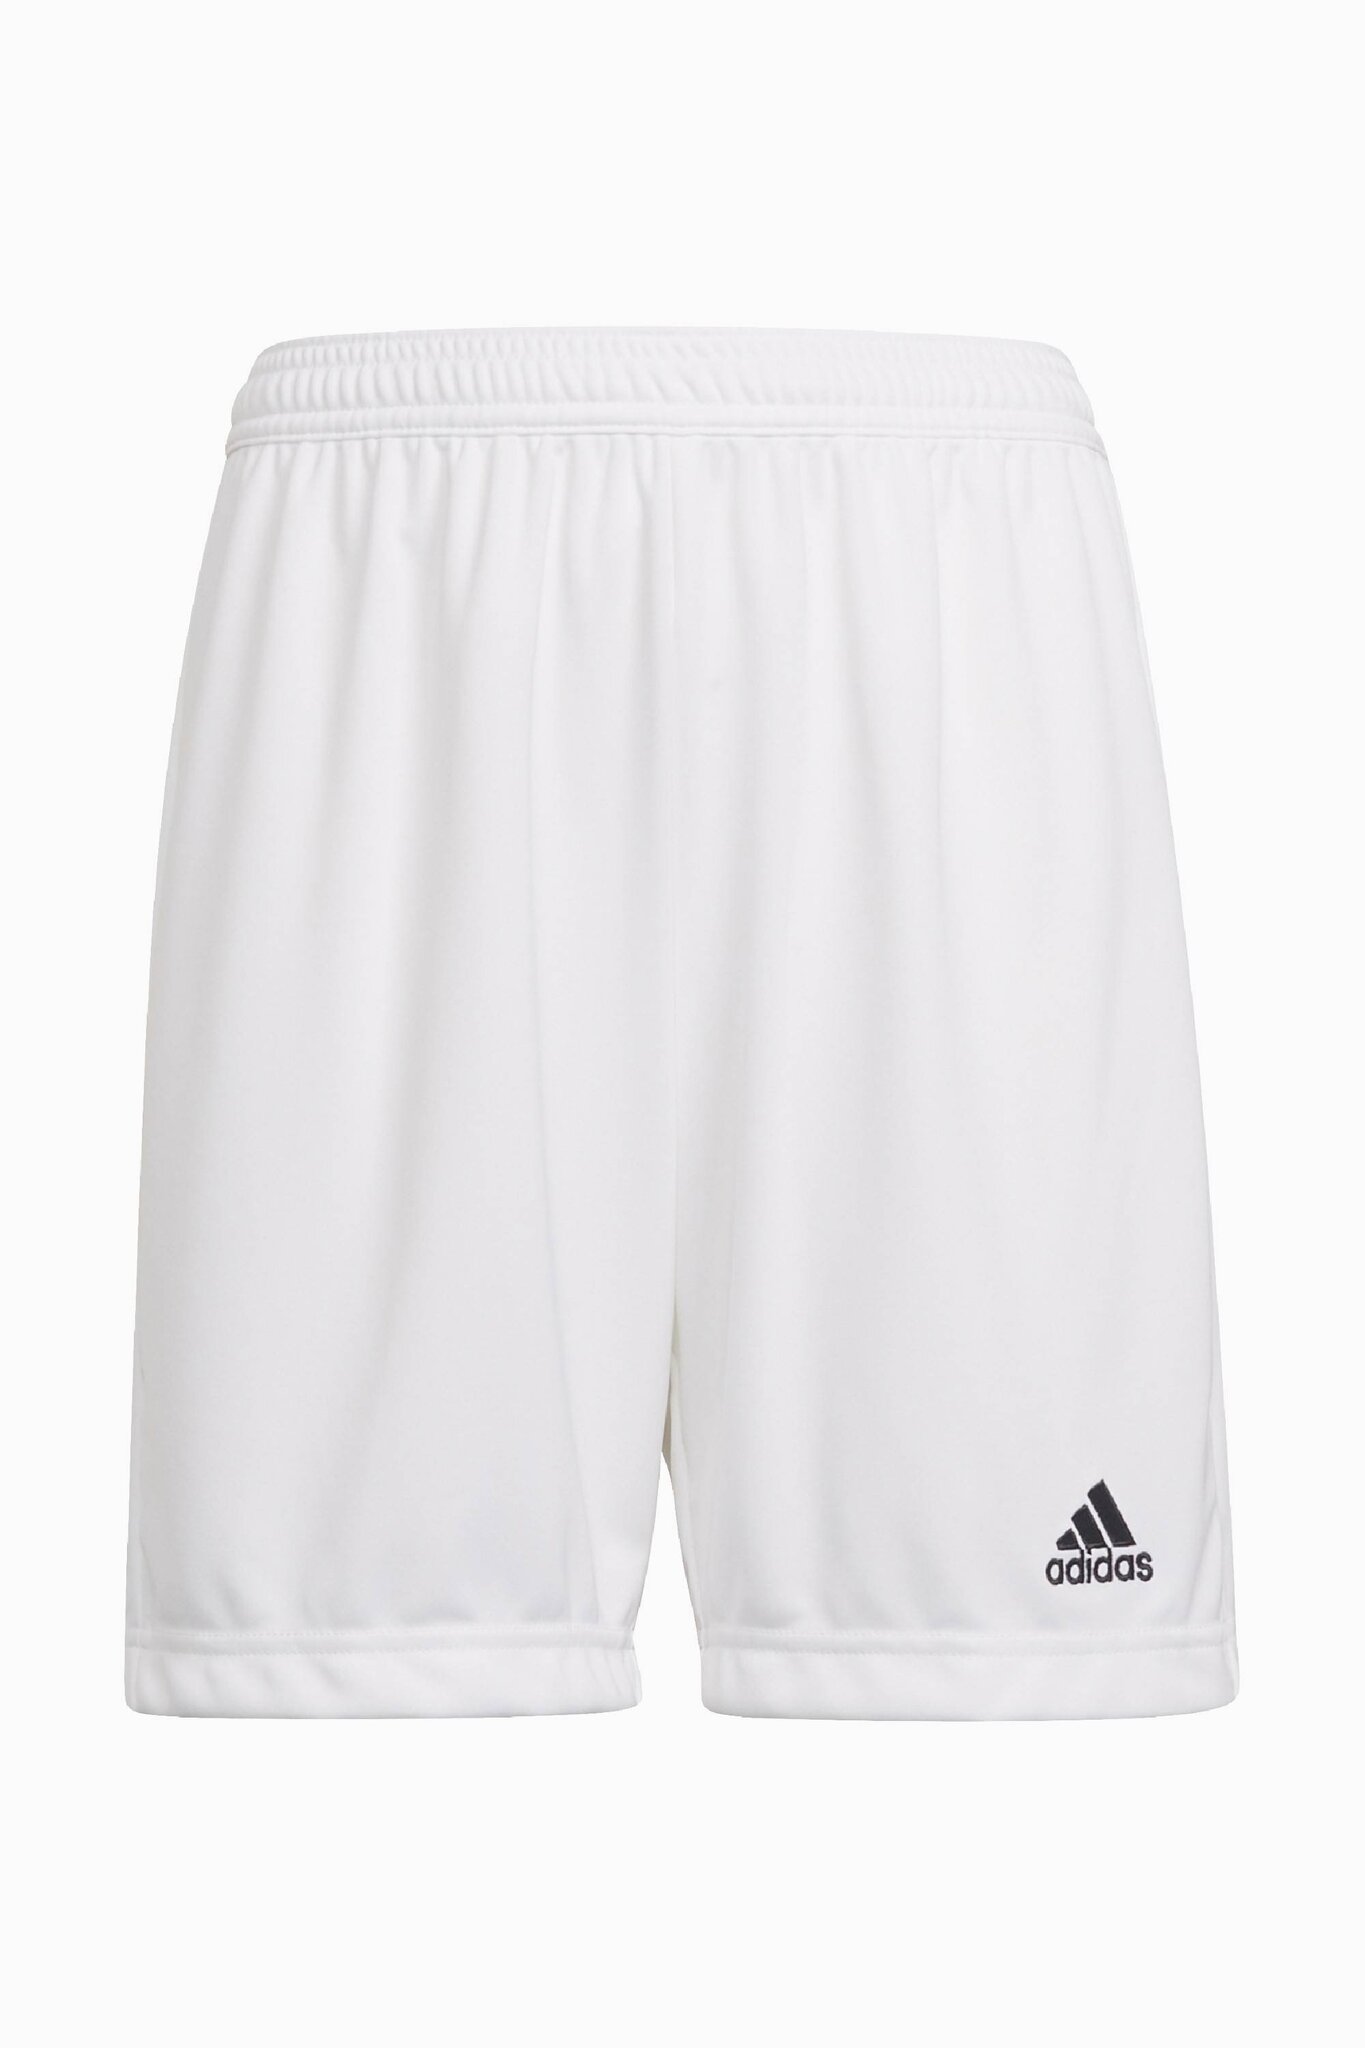 Шорты 22. Adidas Junior шорты. Шорты адидас белые. Шорты белые для мальчика 116. Adidas White shorts без фона.